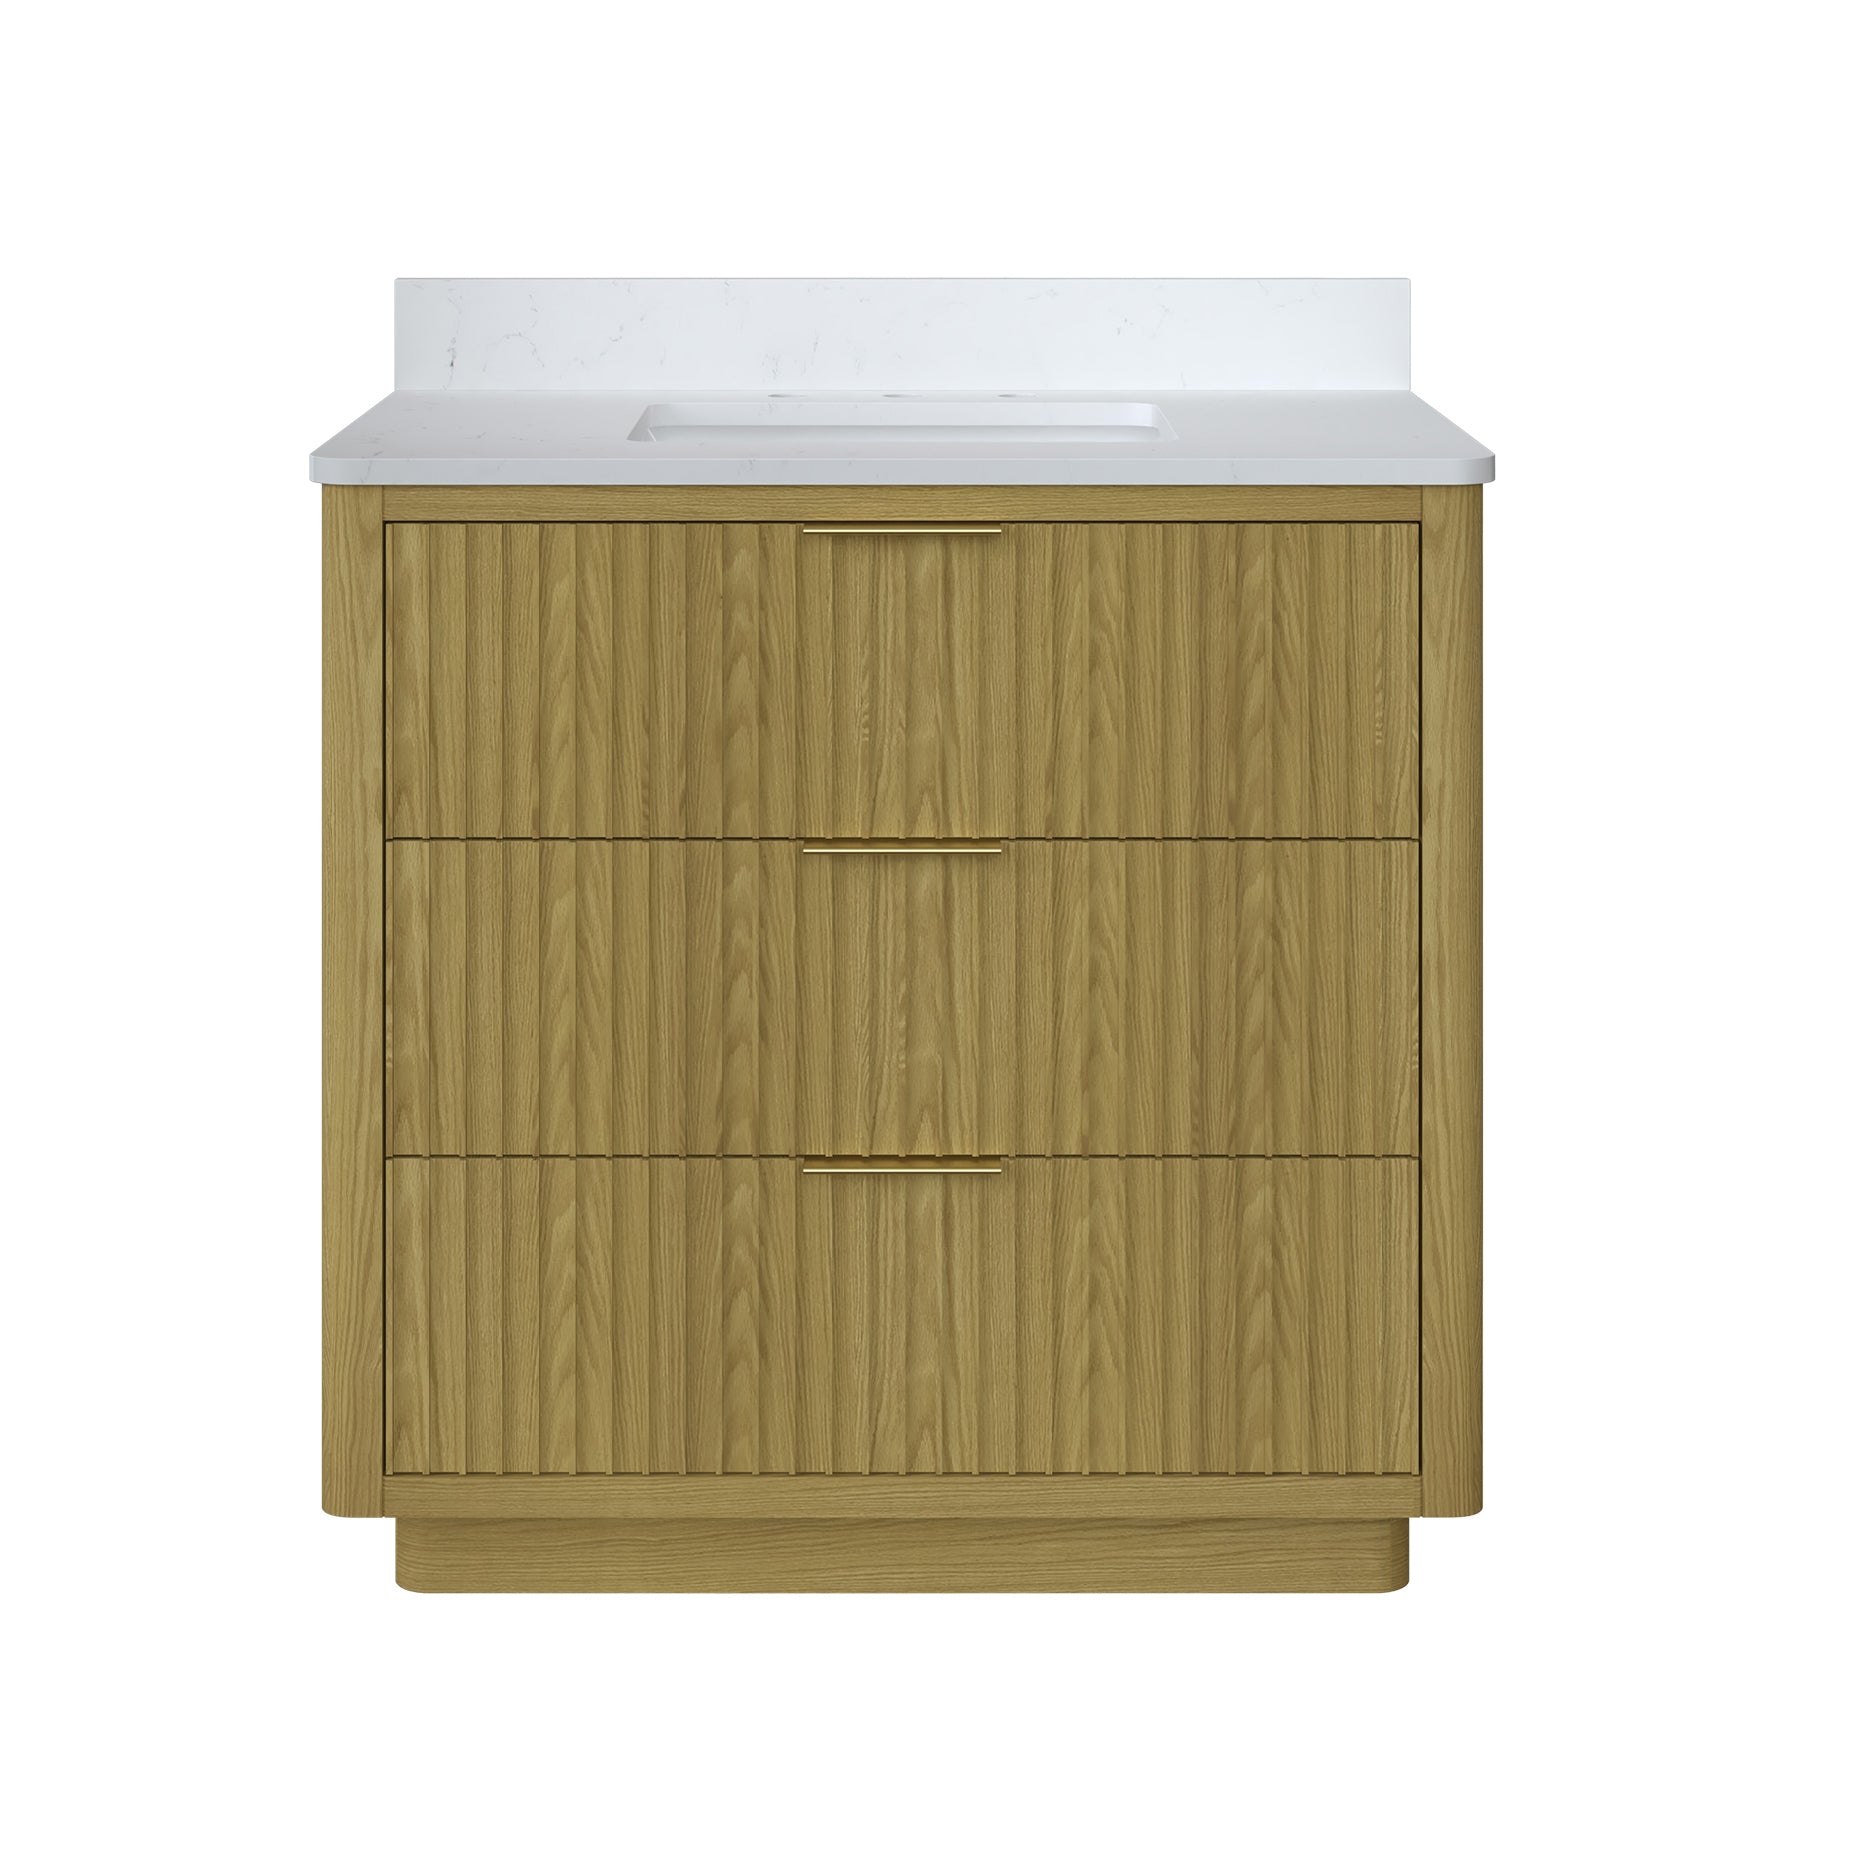 36 in. Oak Freestanding Solid Wood Bathroom Vanity with White Quartz Countertop